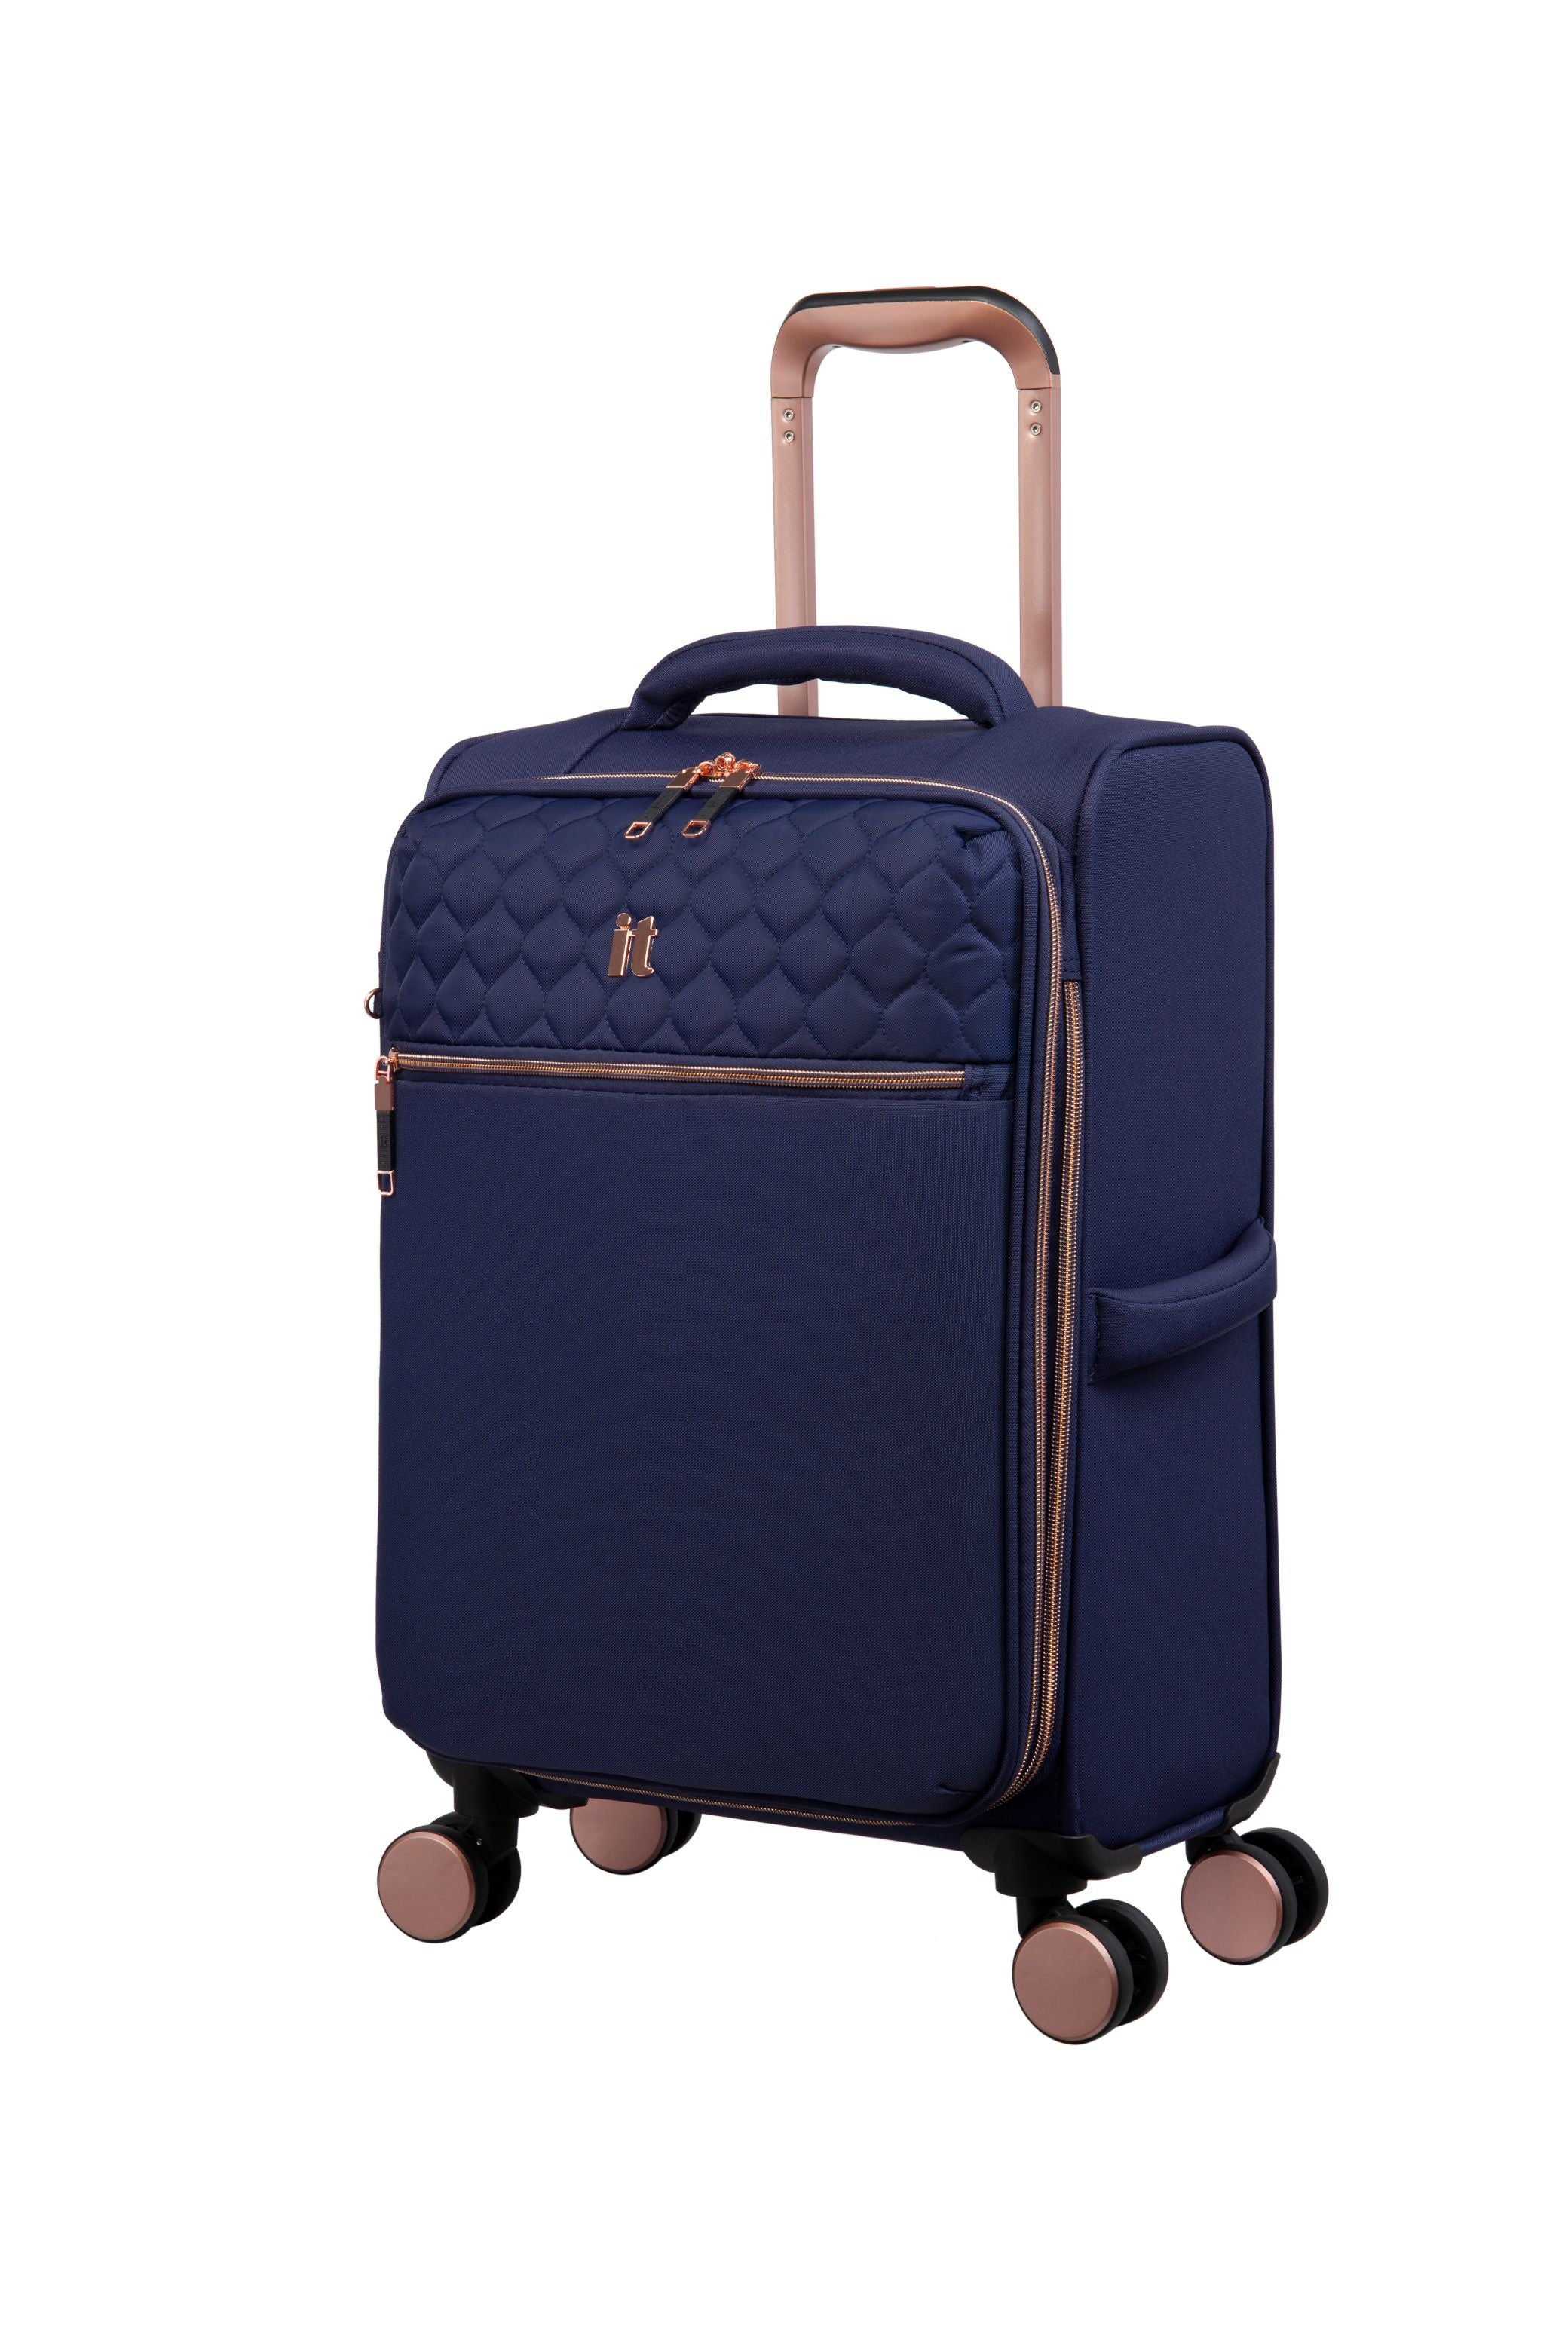 It Luggage Suitcase Lux-lite Divinity Eva - Royal Blue - Cabin  | TJ Hughes